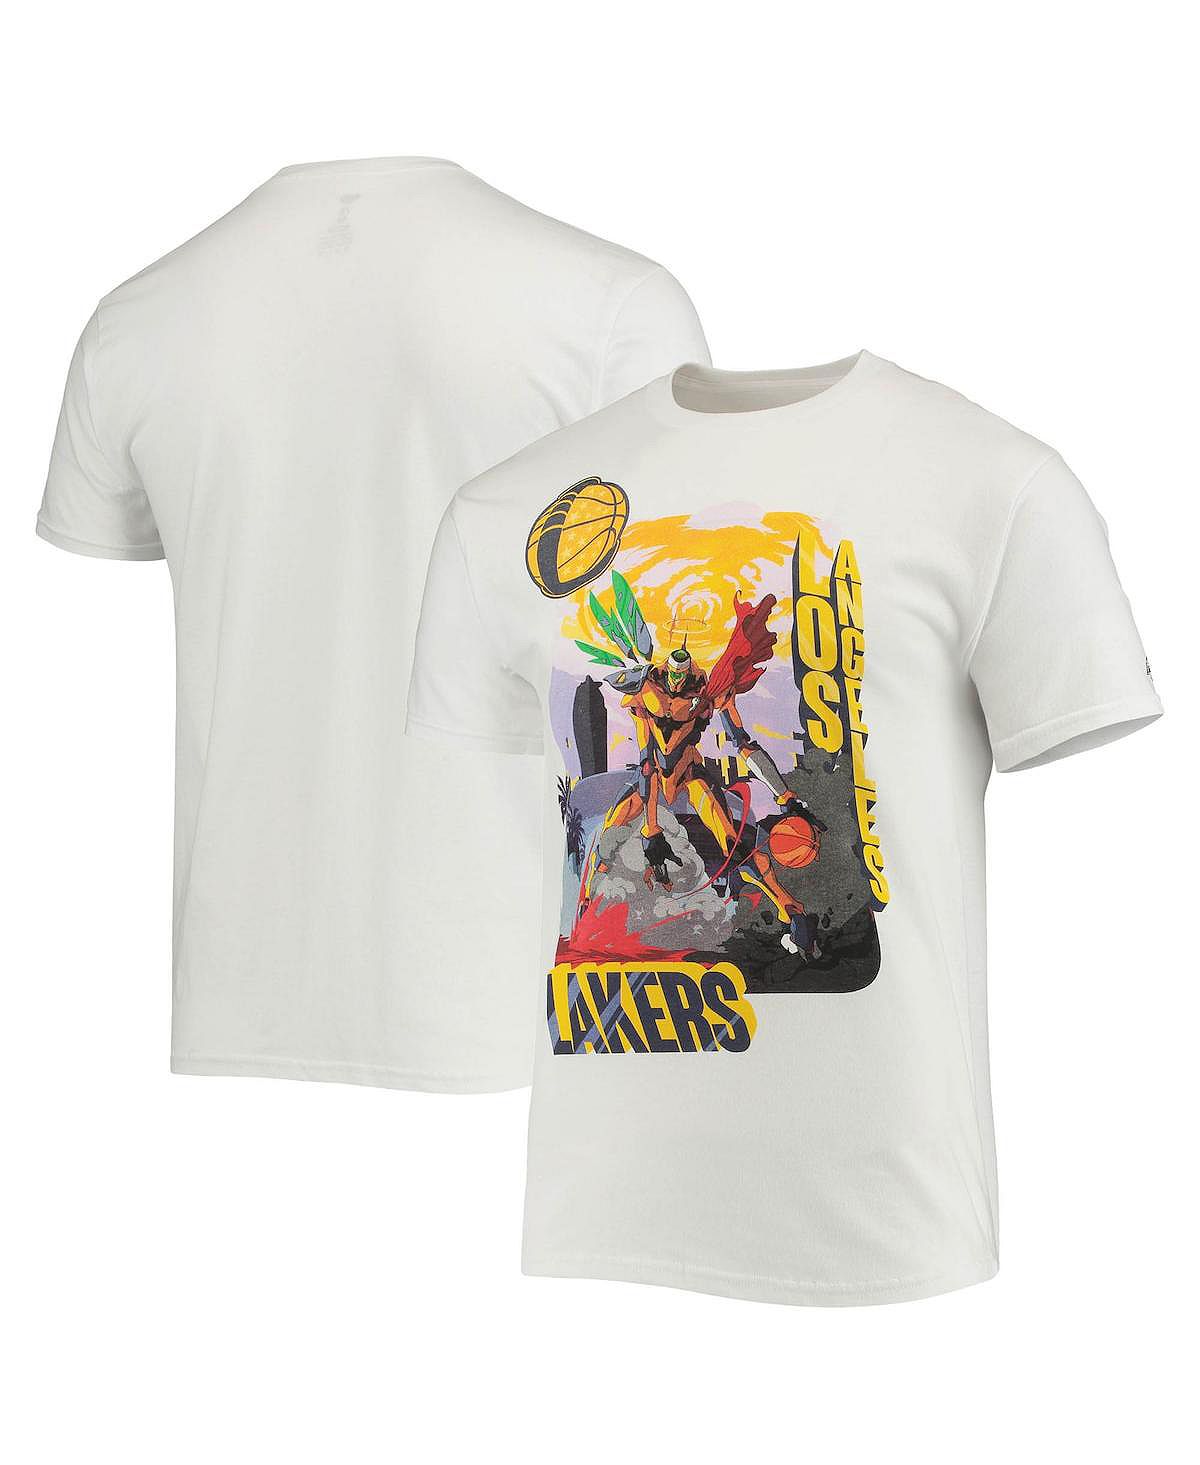 Мужская футболка nba x mcflyy white los angeles lakers с идентификацией artist series NBA Exclusive Collection, белый